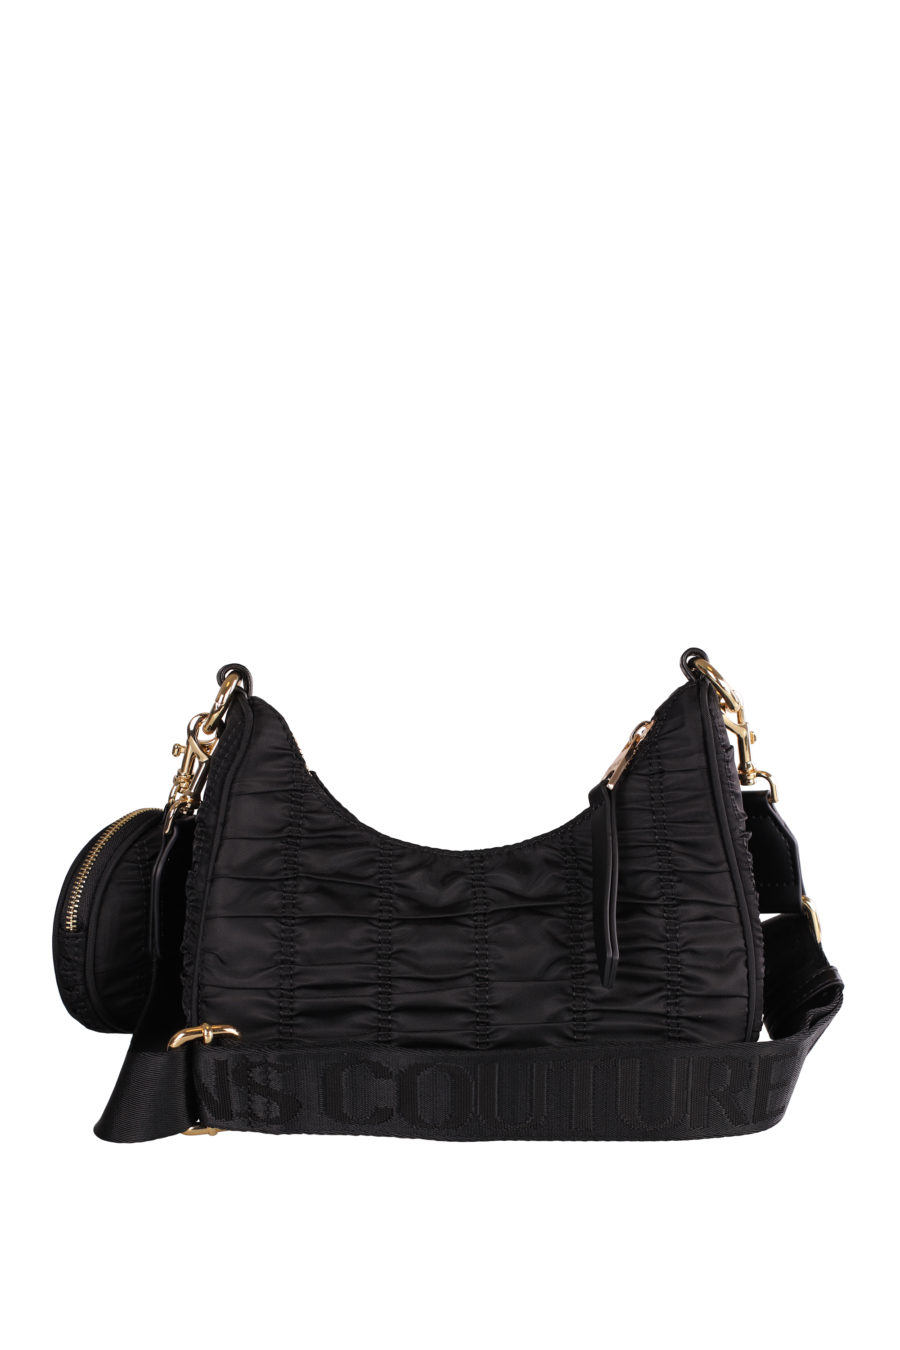 Black nylon shoulder bag "Range X" - IMG 4623